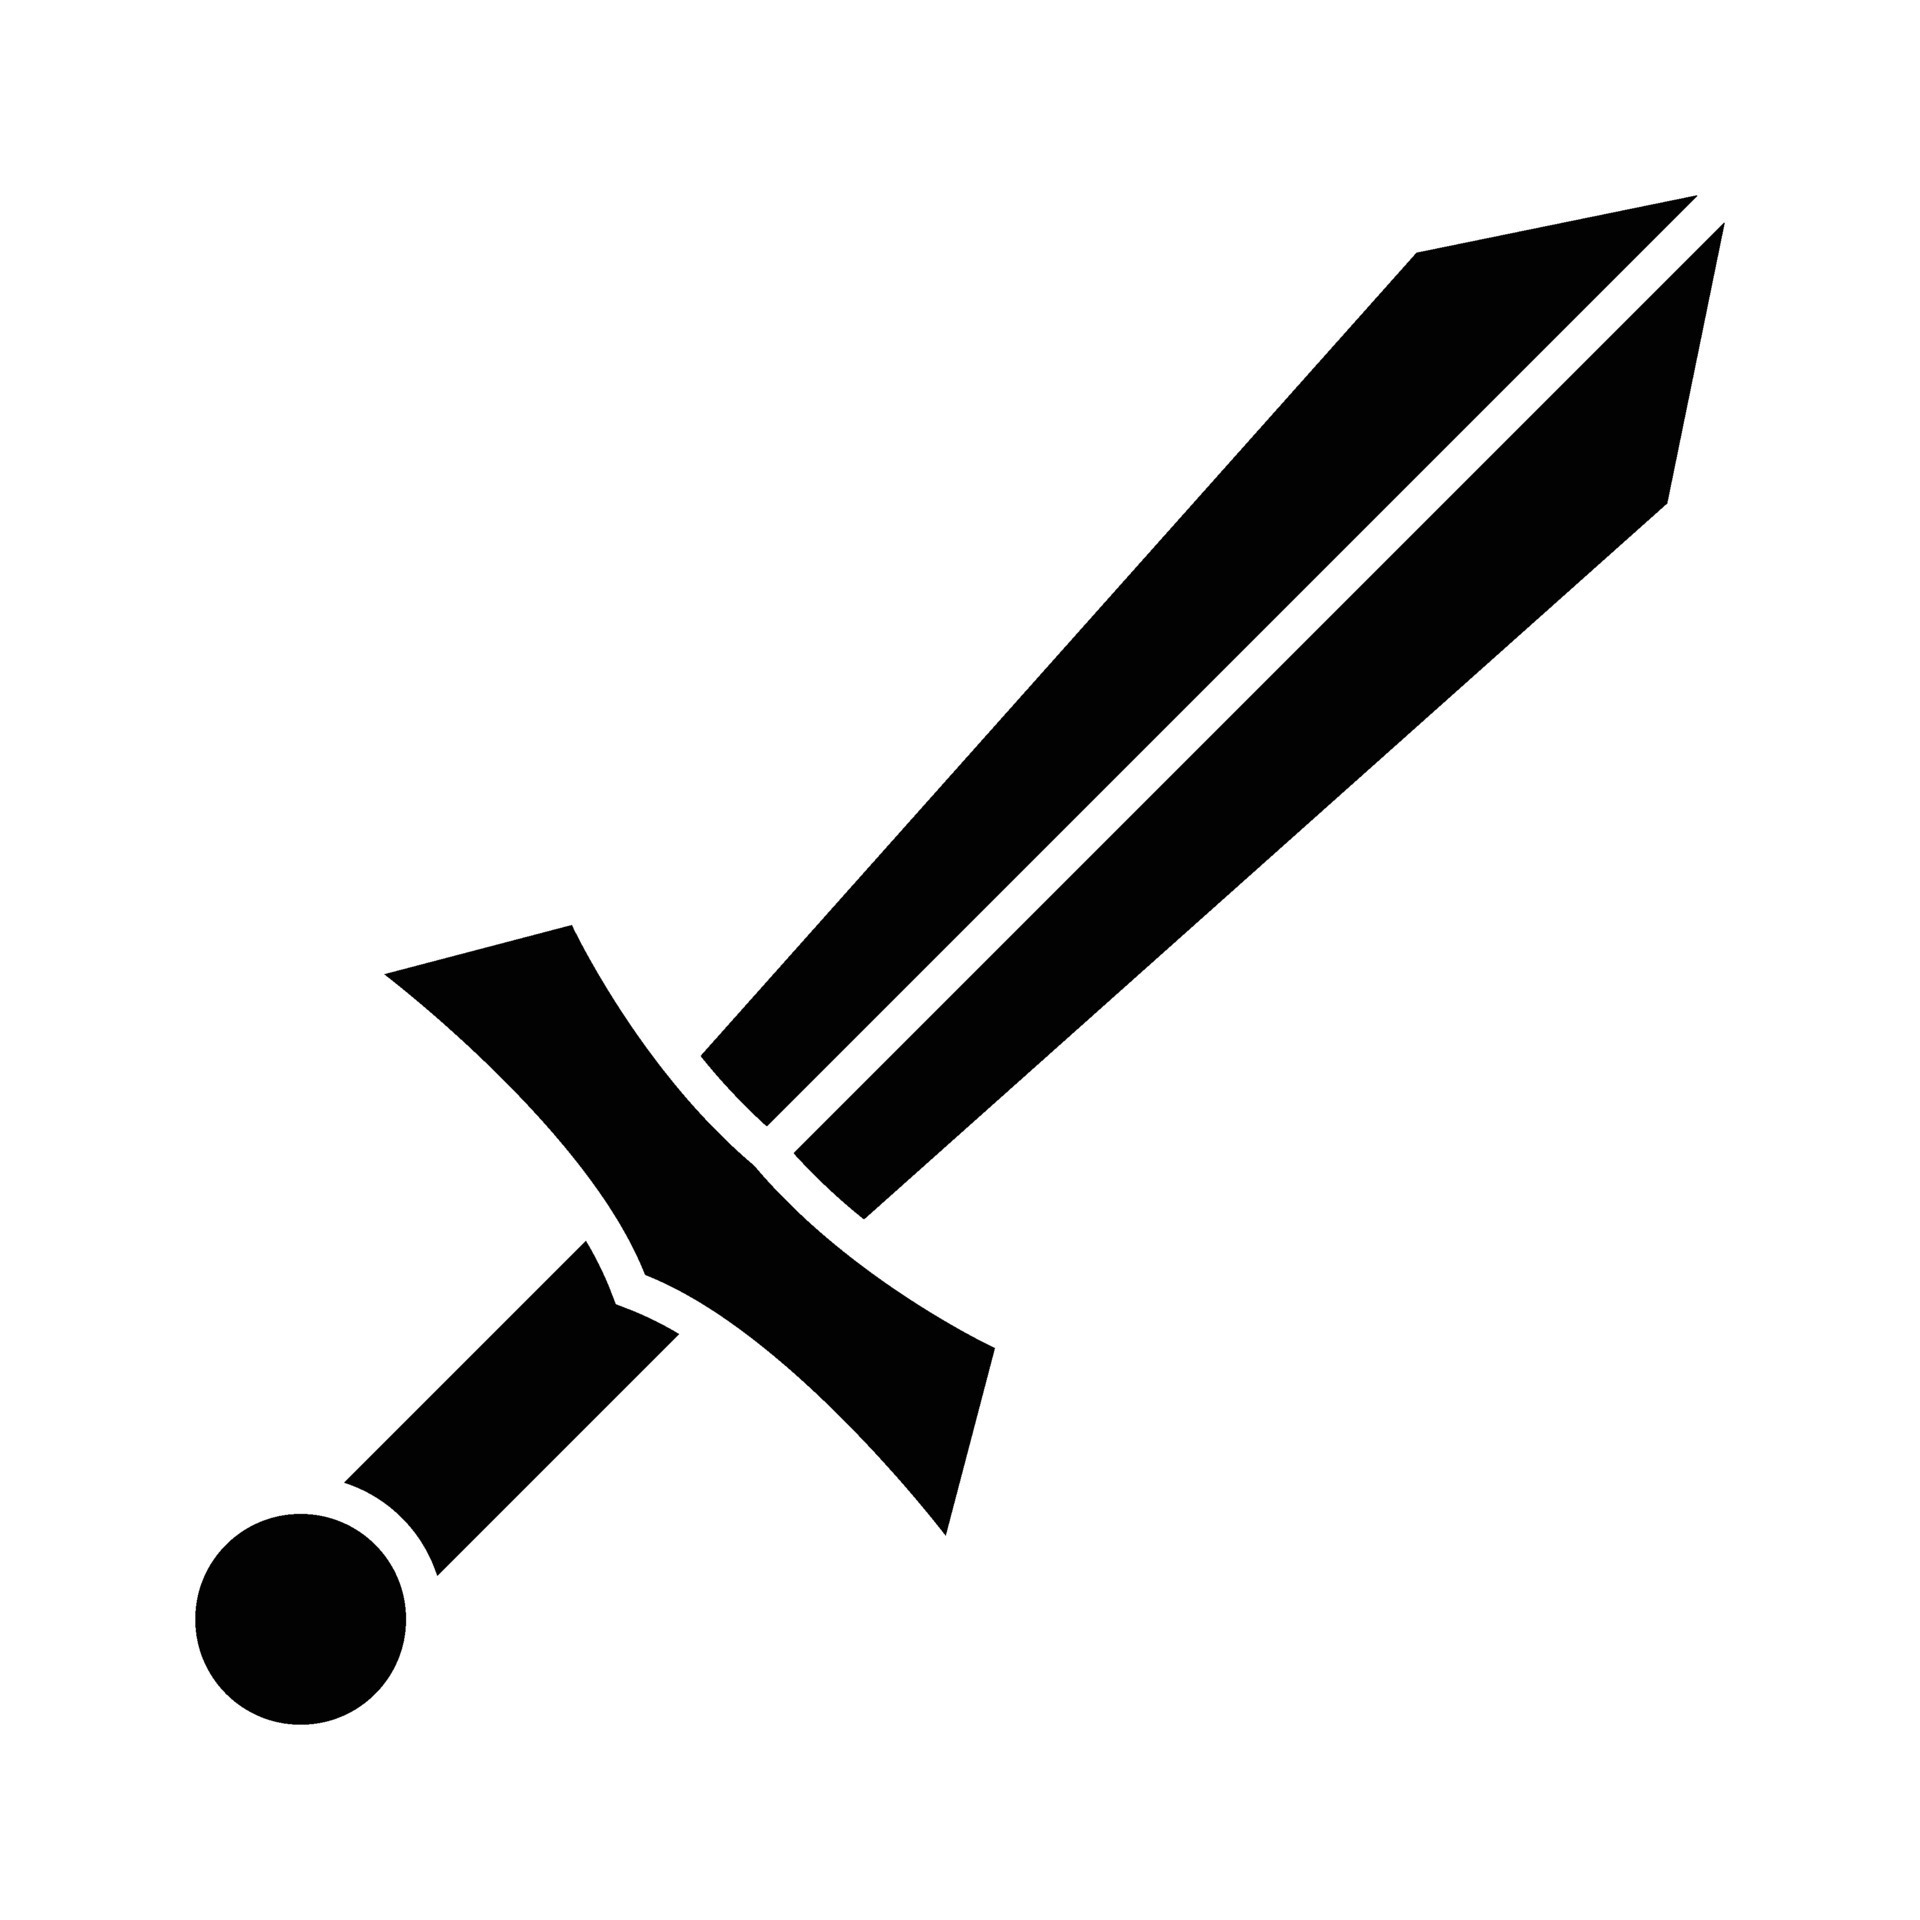 Sword Vector Glyph Icon Design Graphic by Manshagraphics · Creative Fabrica